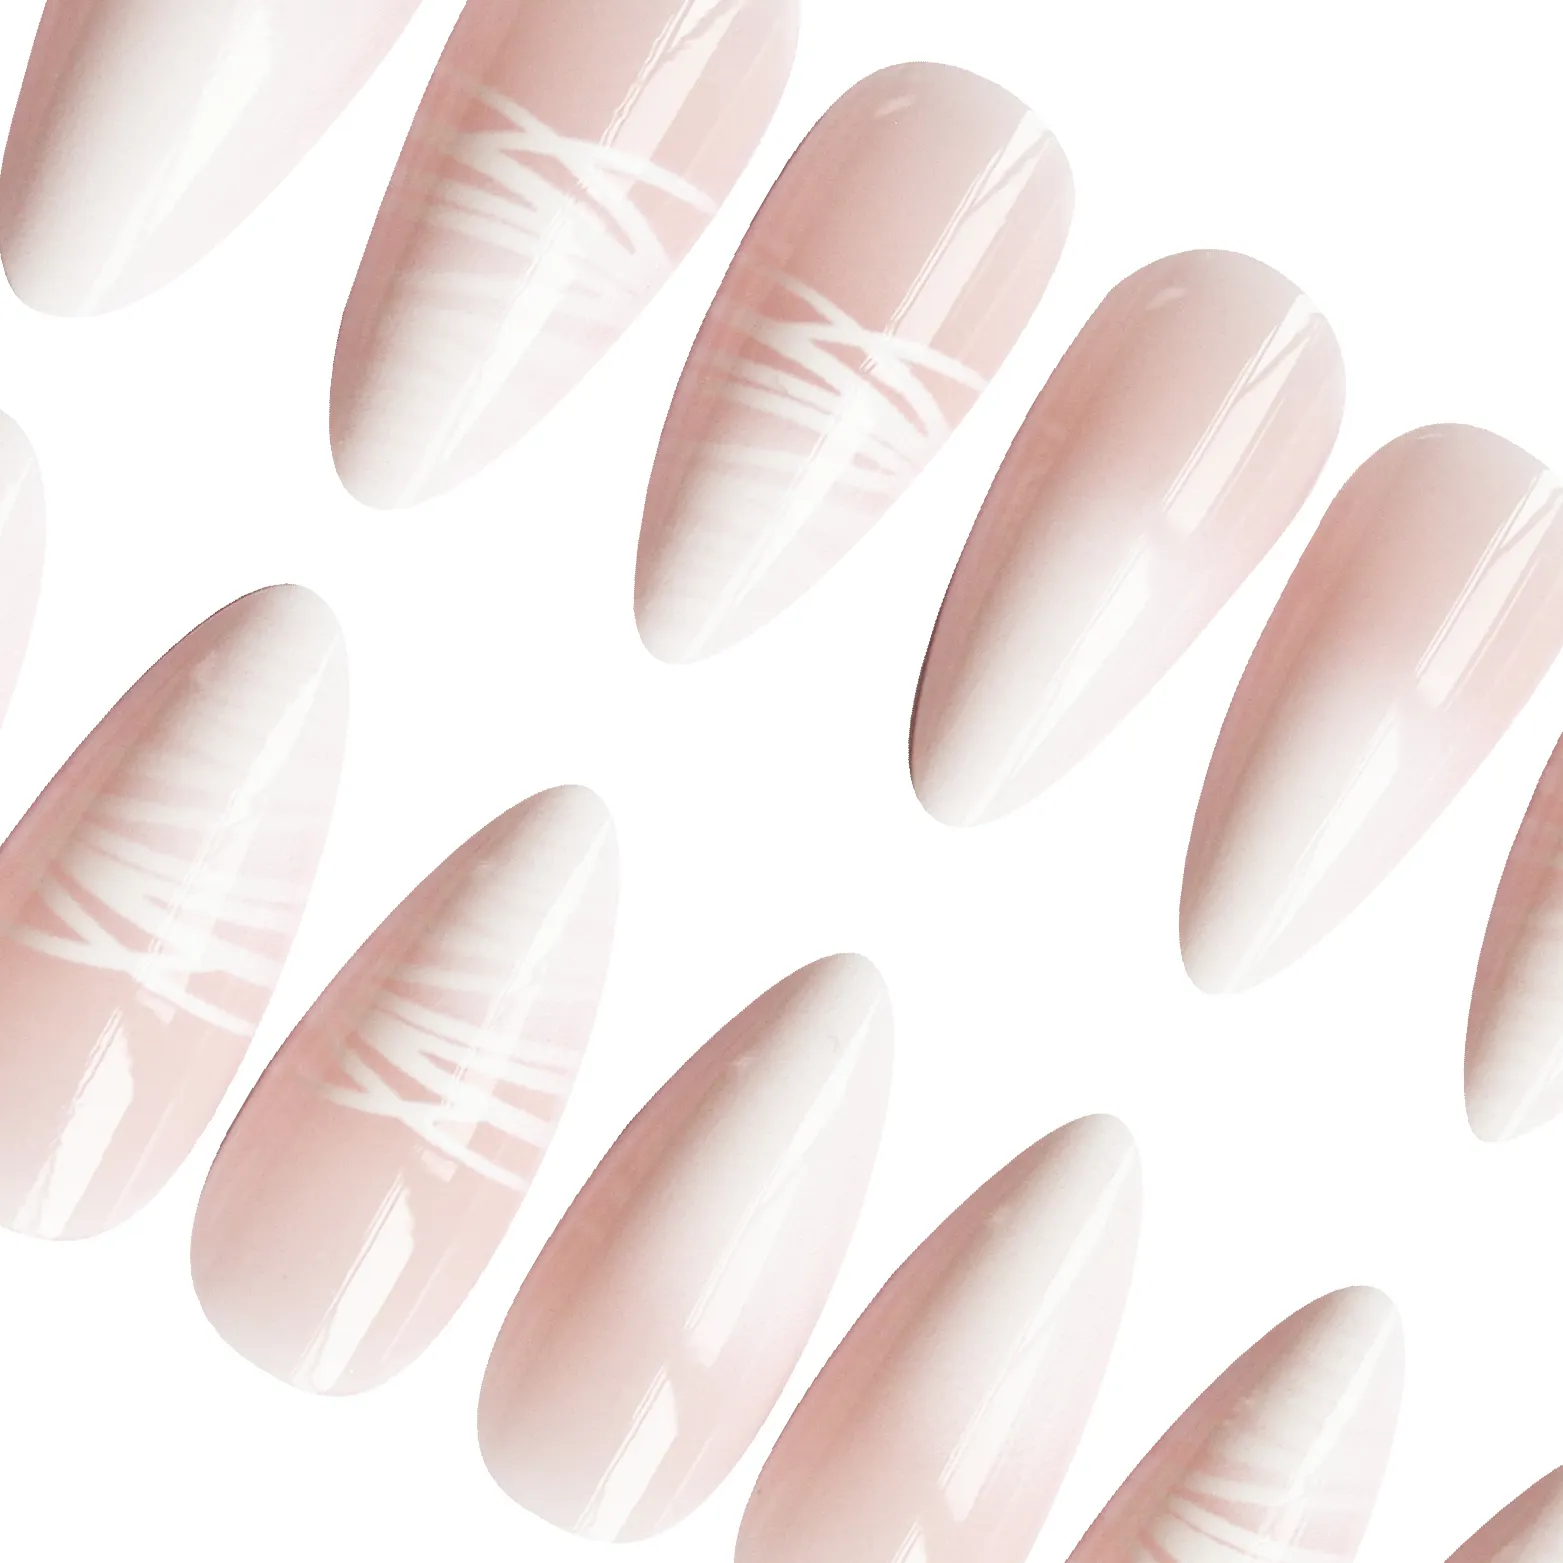 NEWAIR new arrival false acrylic nail full cover fingernails almond shape white gradual nails for girl